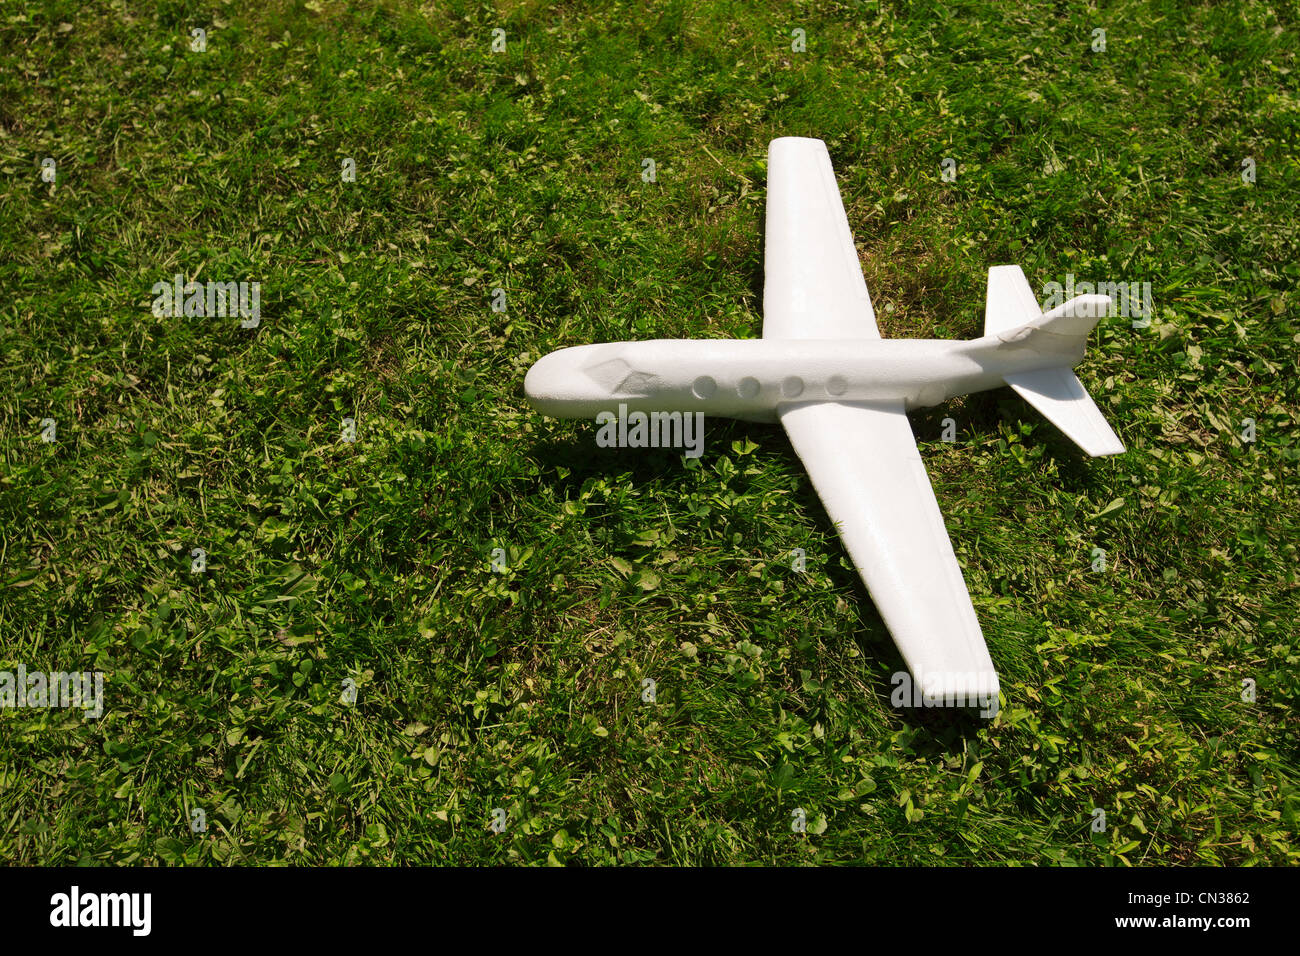 Toy plane on grass Stock Photo